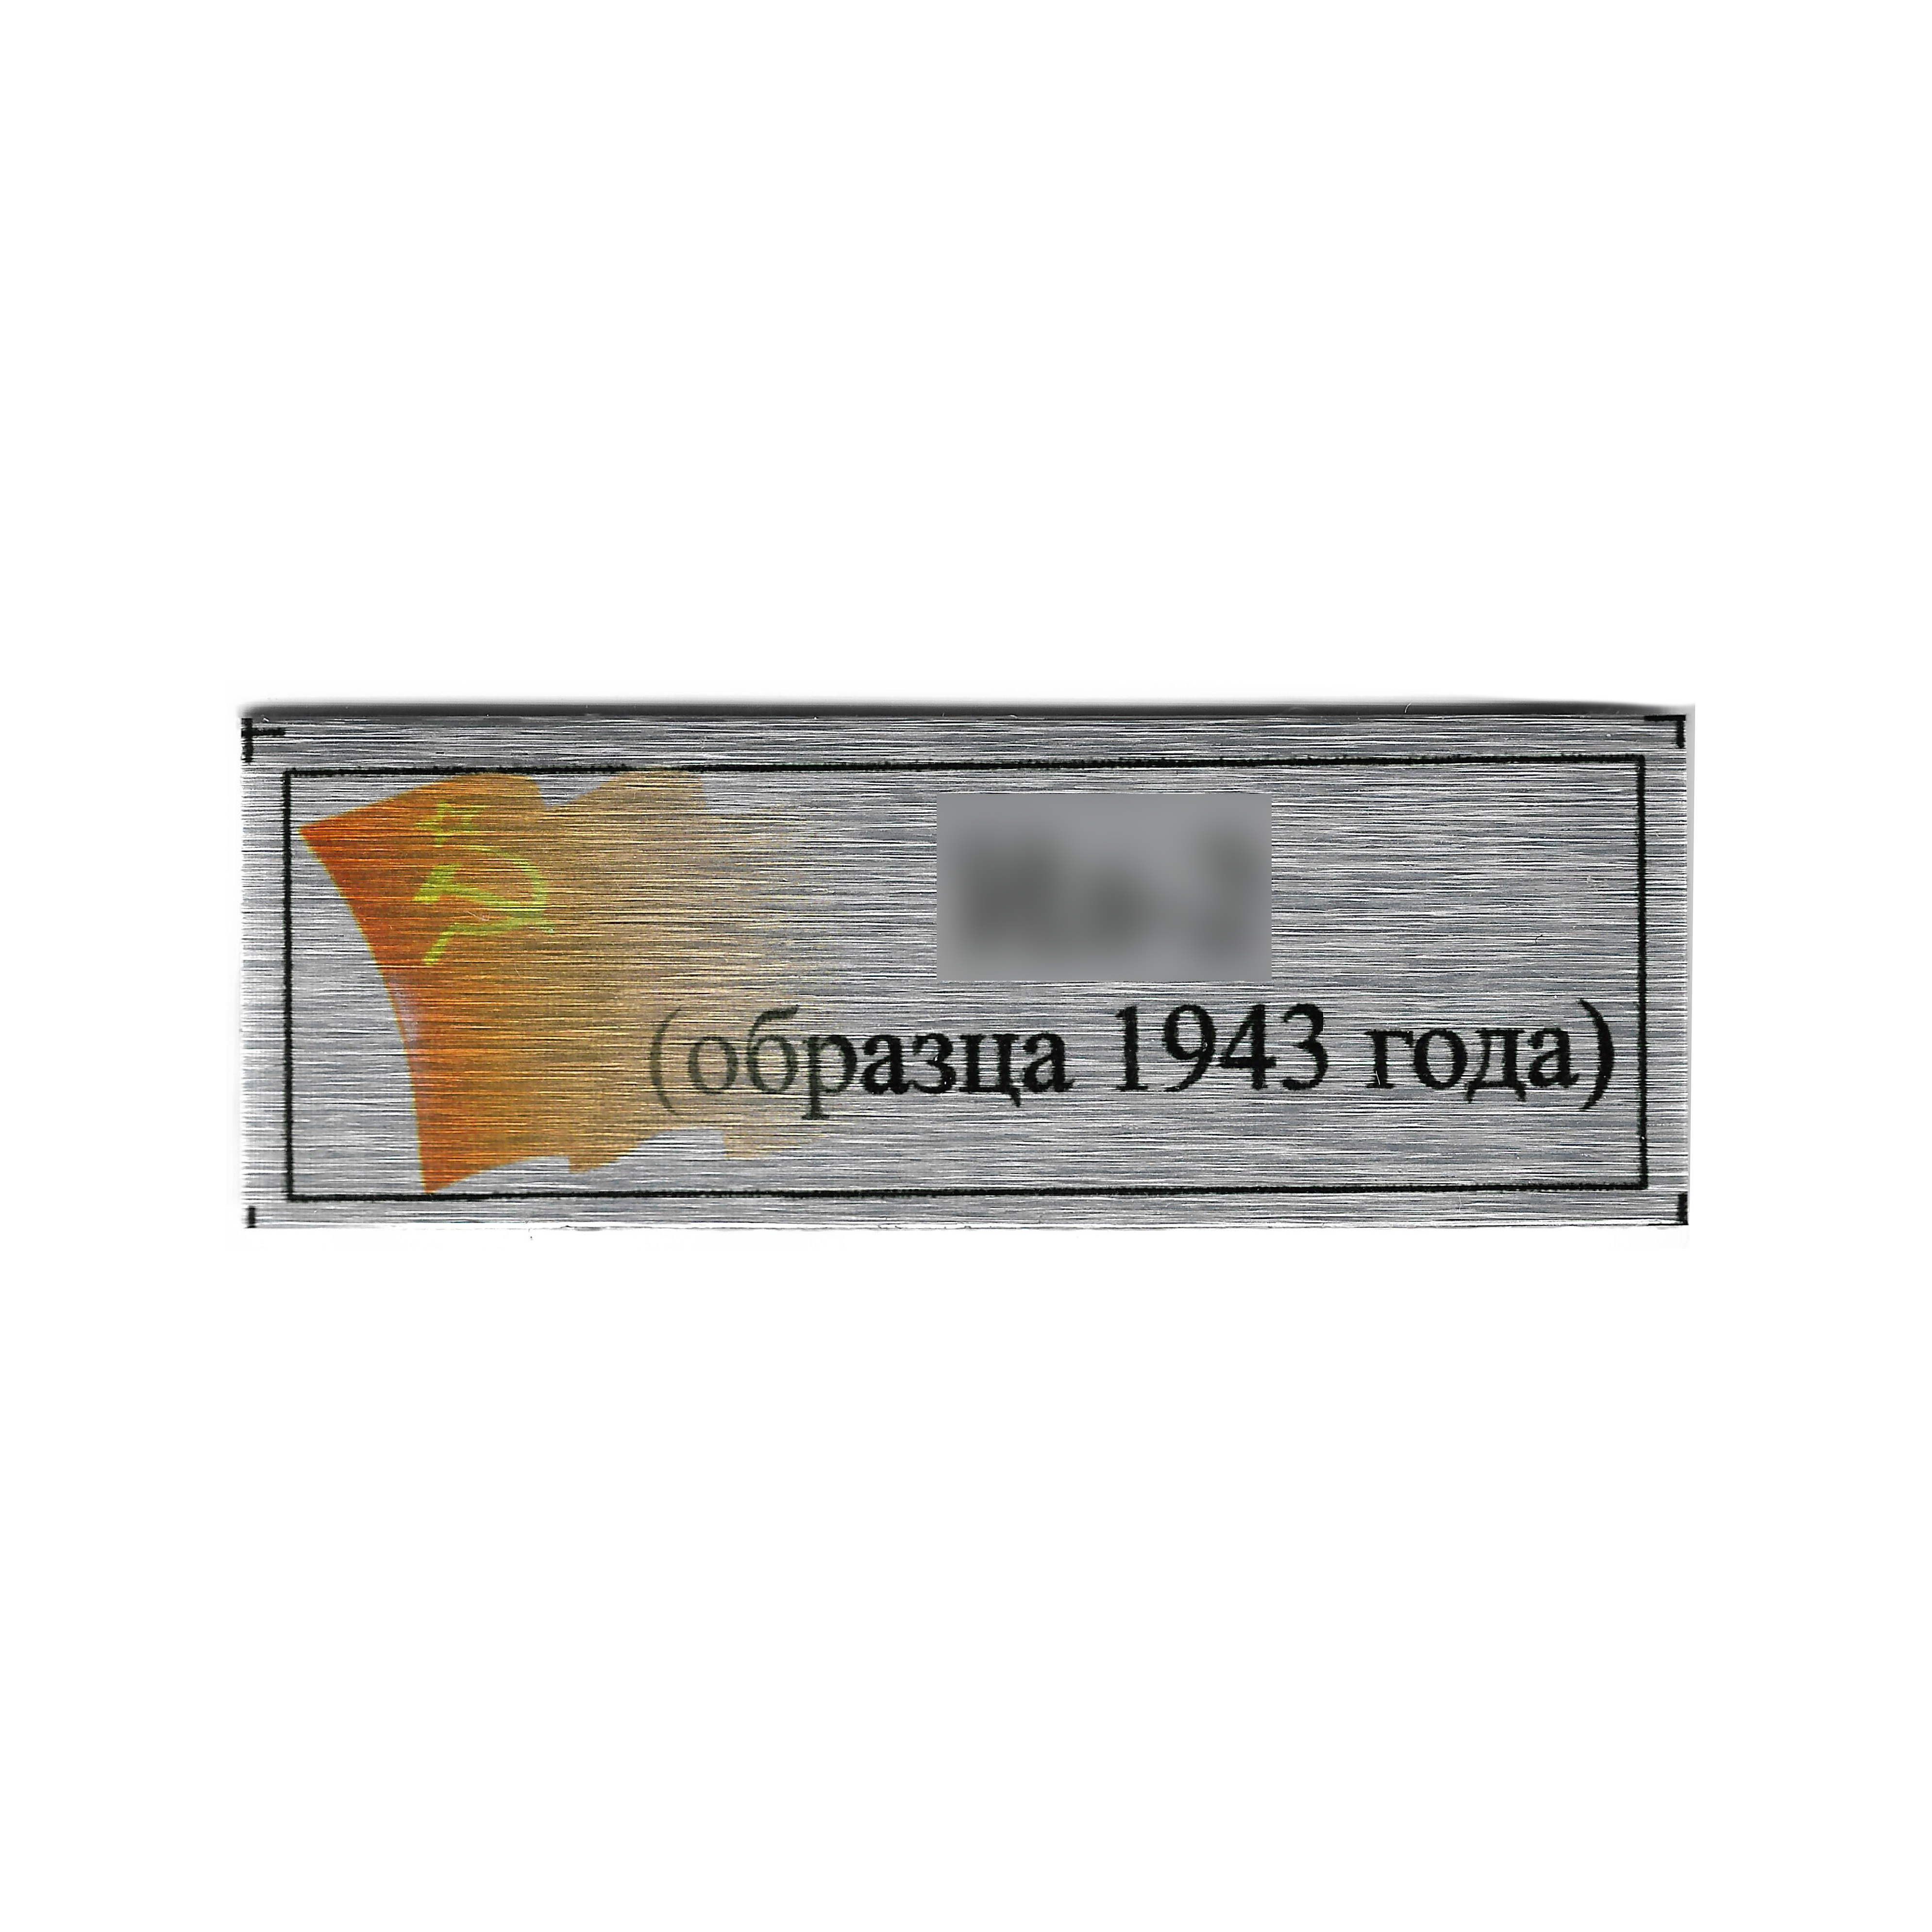 Т353 Plate Табличка для Советского двухместного штурмовика Илюшин-2 (обр. 1943 г.), 60х20 мм, цвет серебро